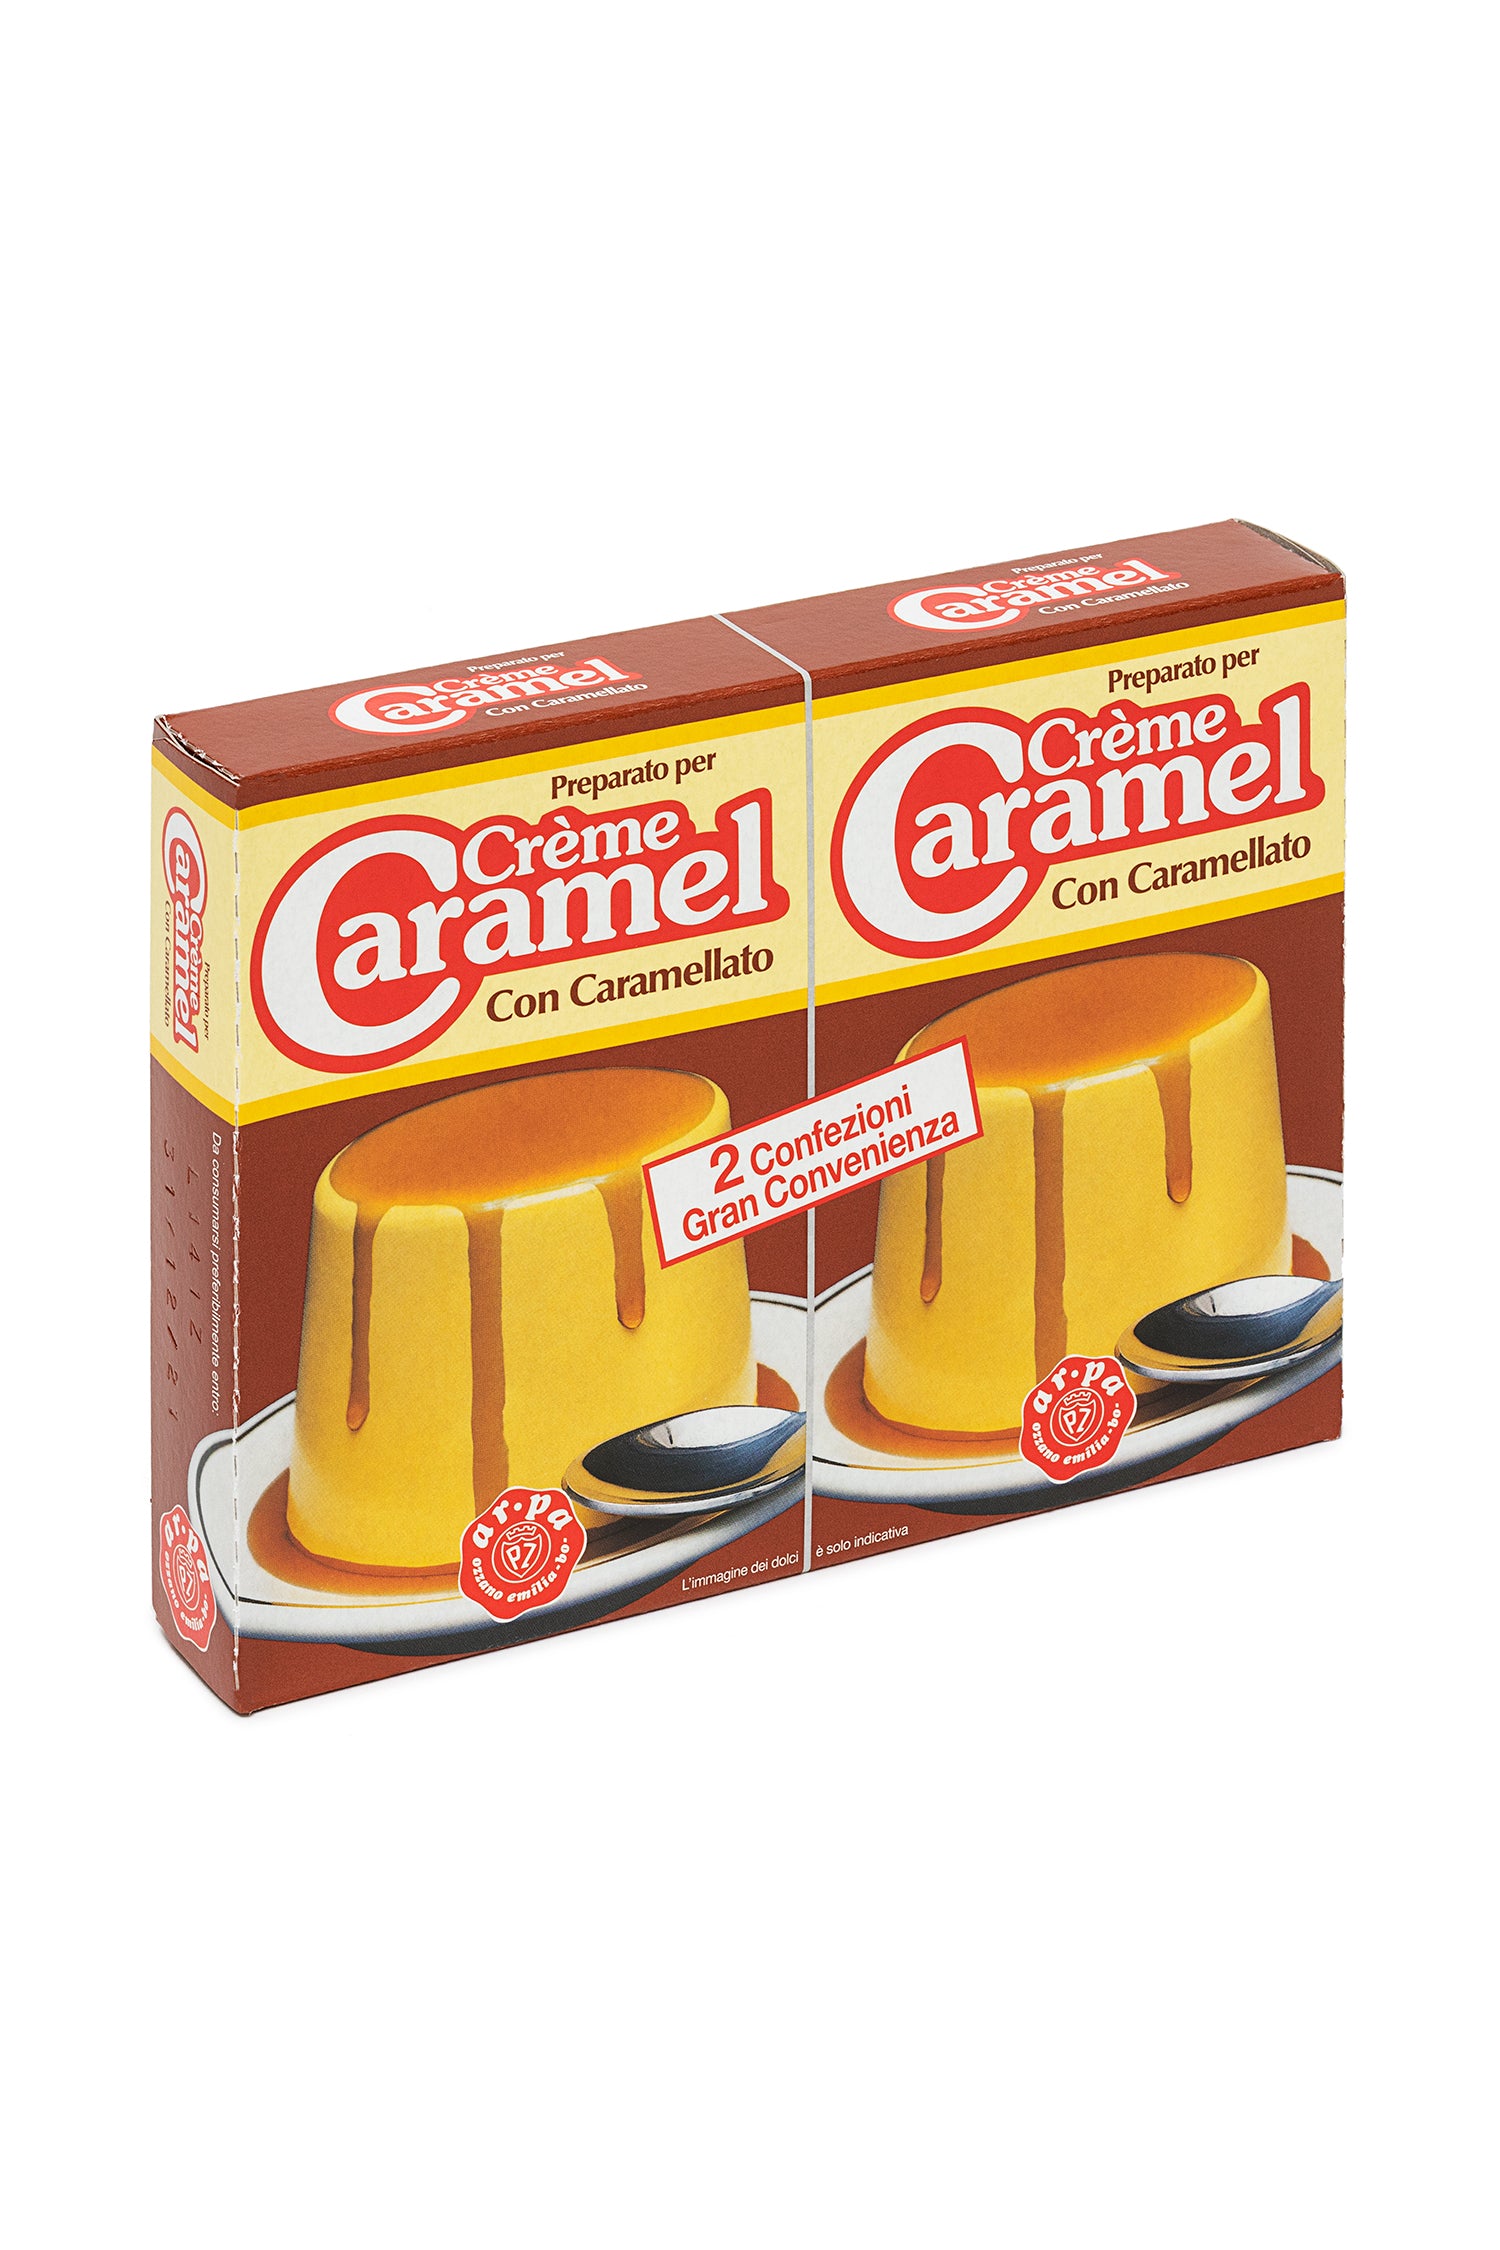 Preparto Per Creme Caramel 65+30 g - Ar.pa Lieviti